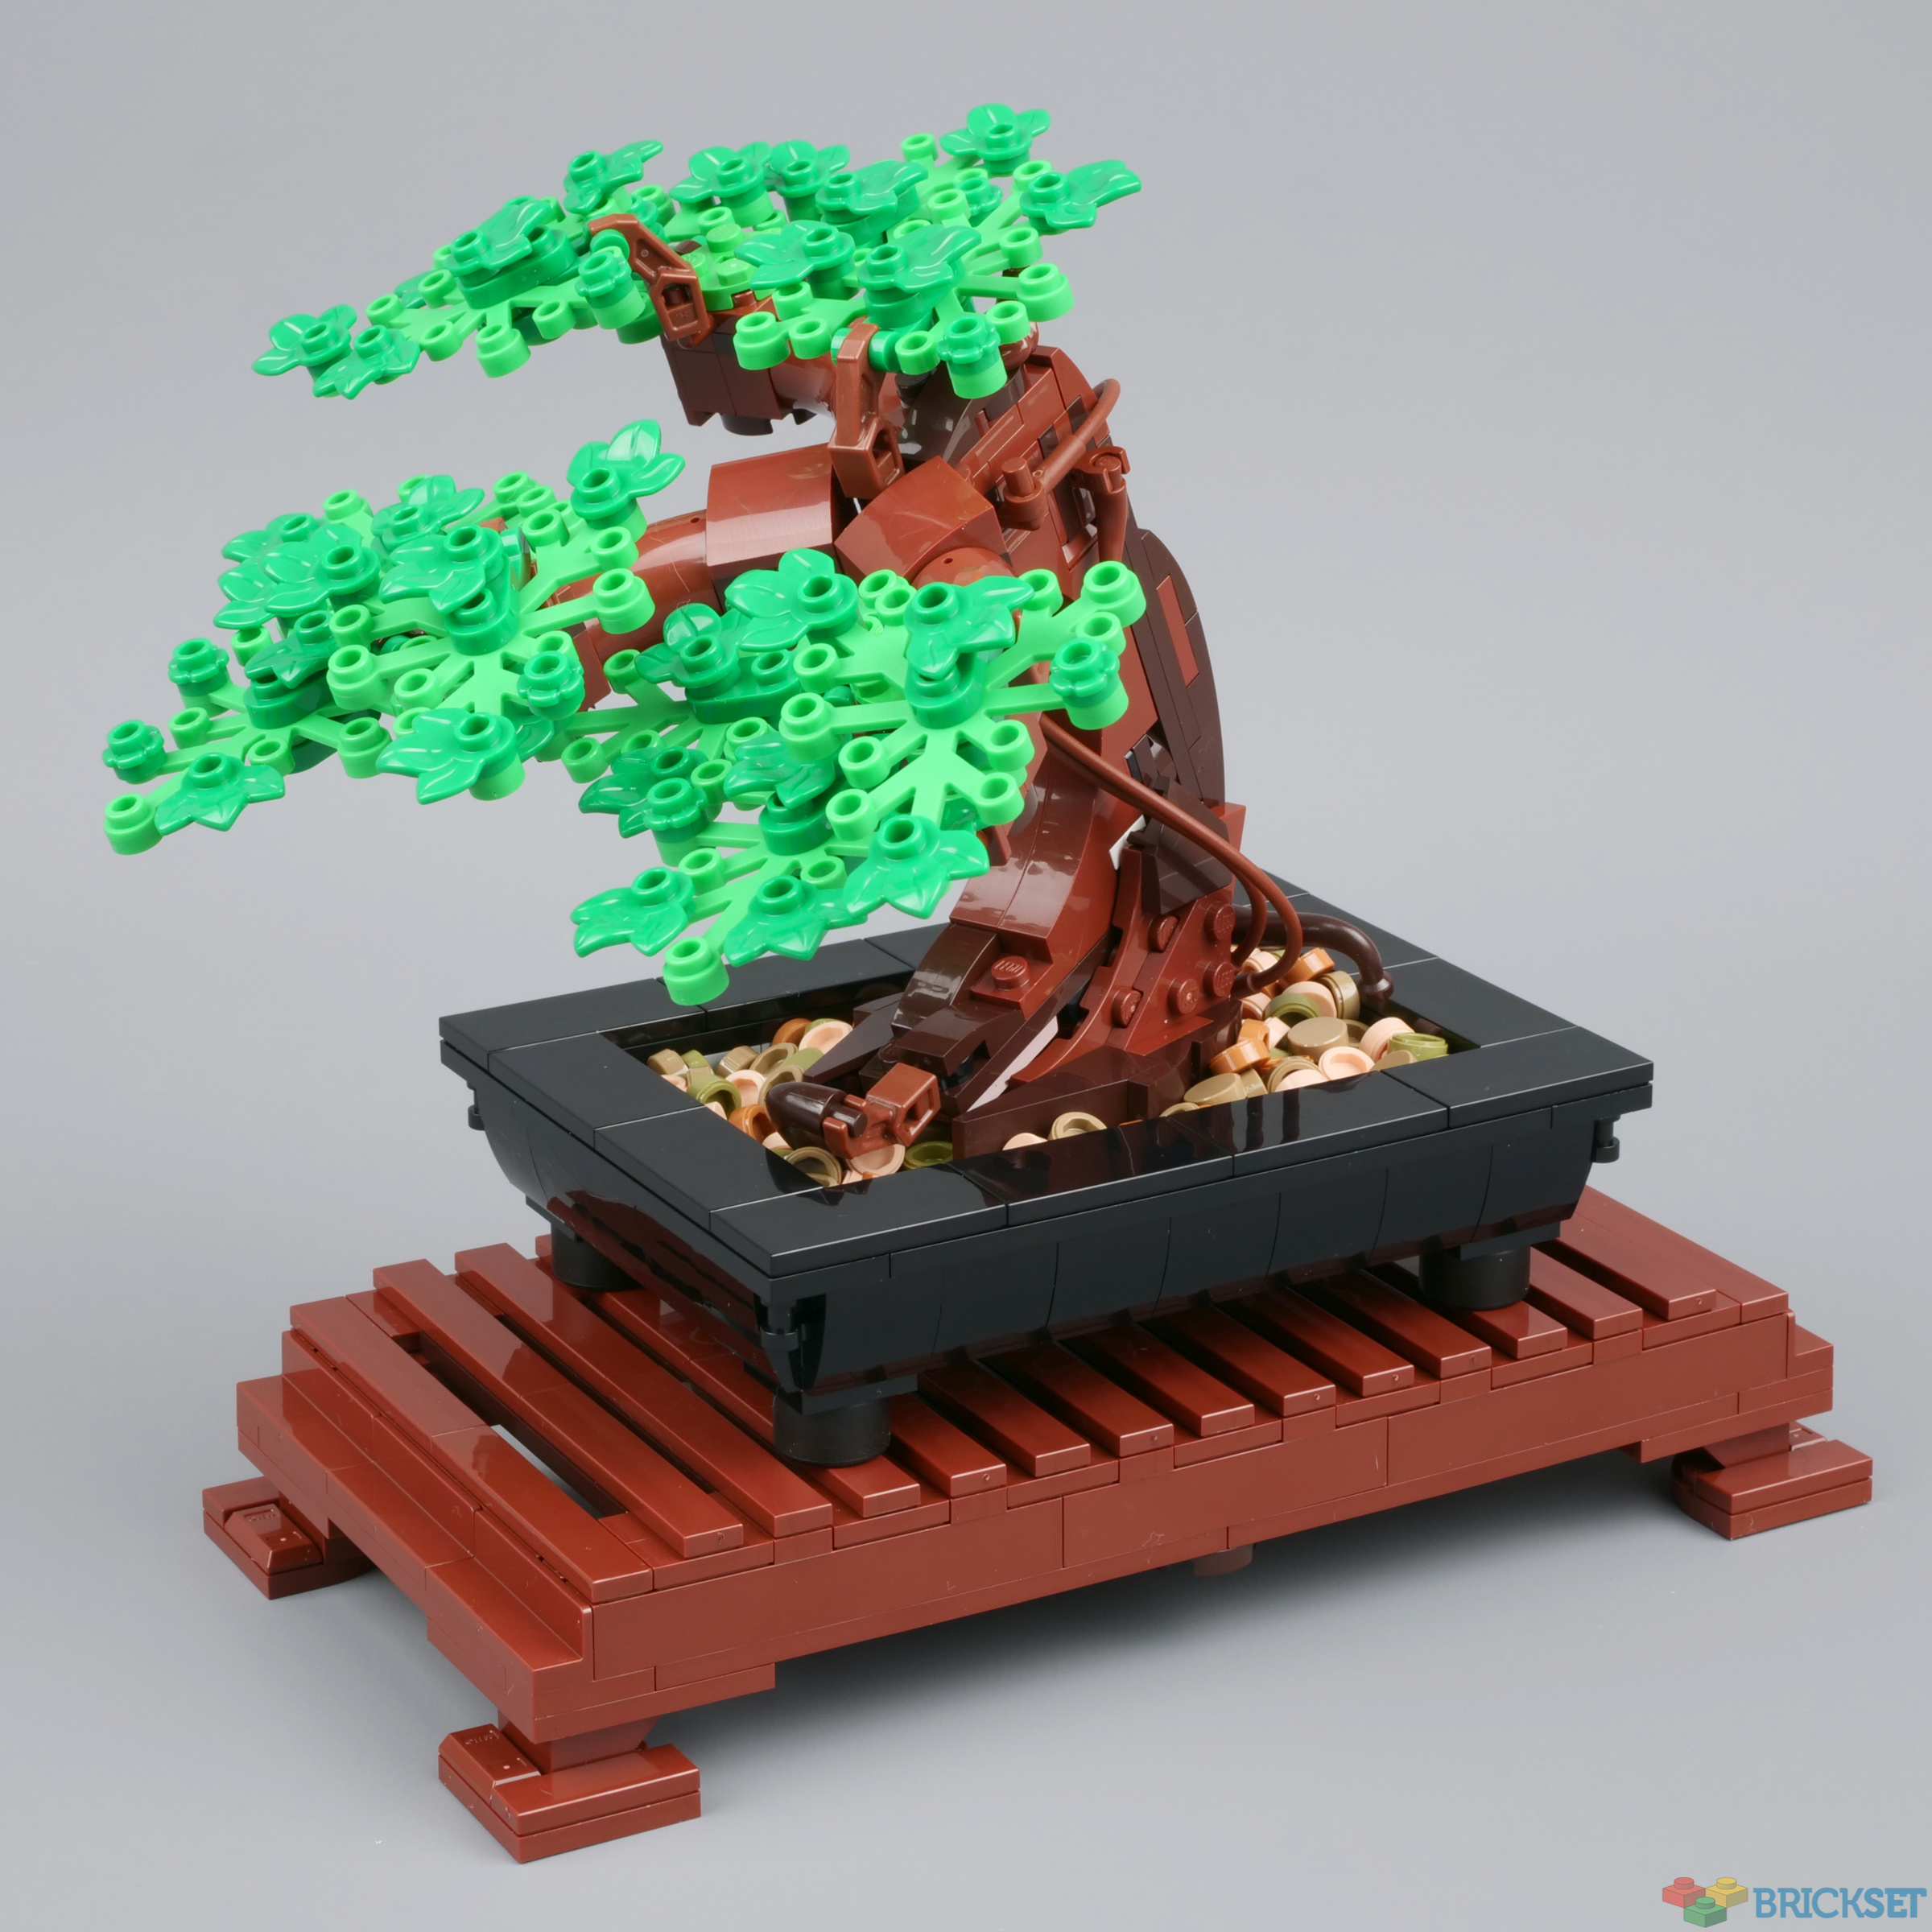 LEGO 10281 Bonsai Tree review